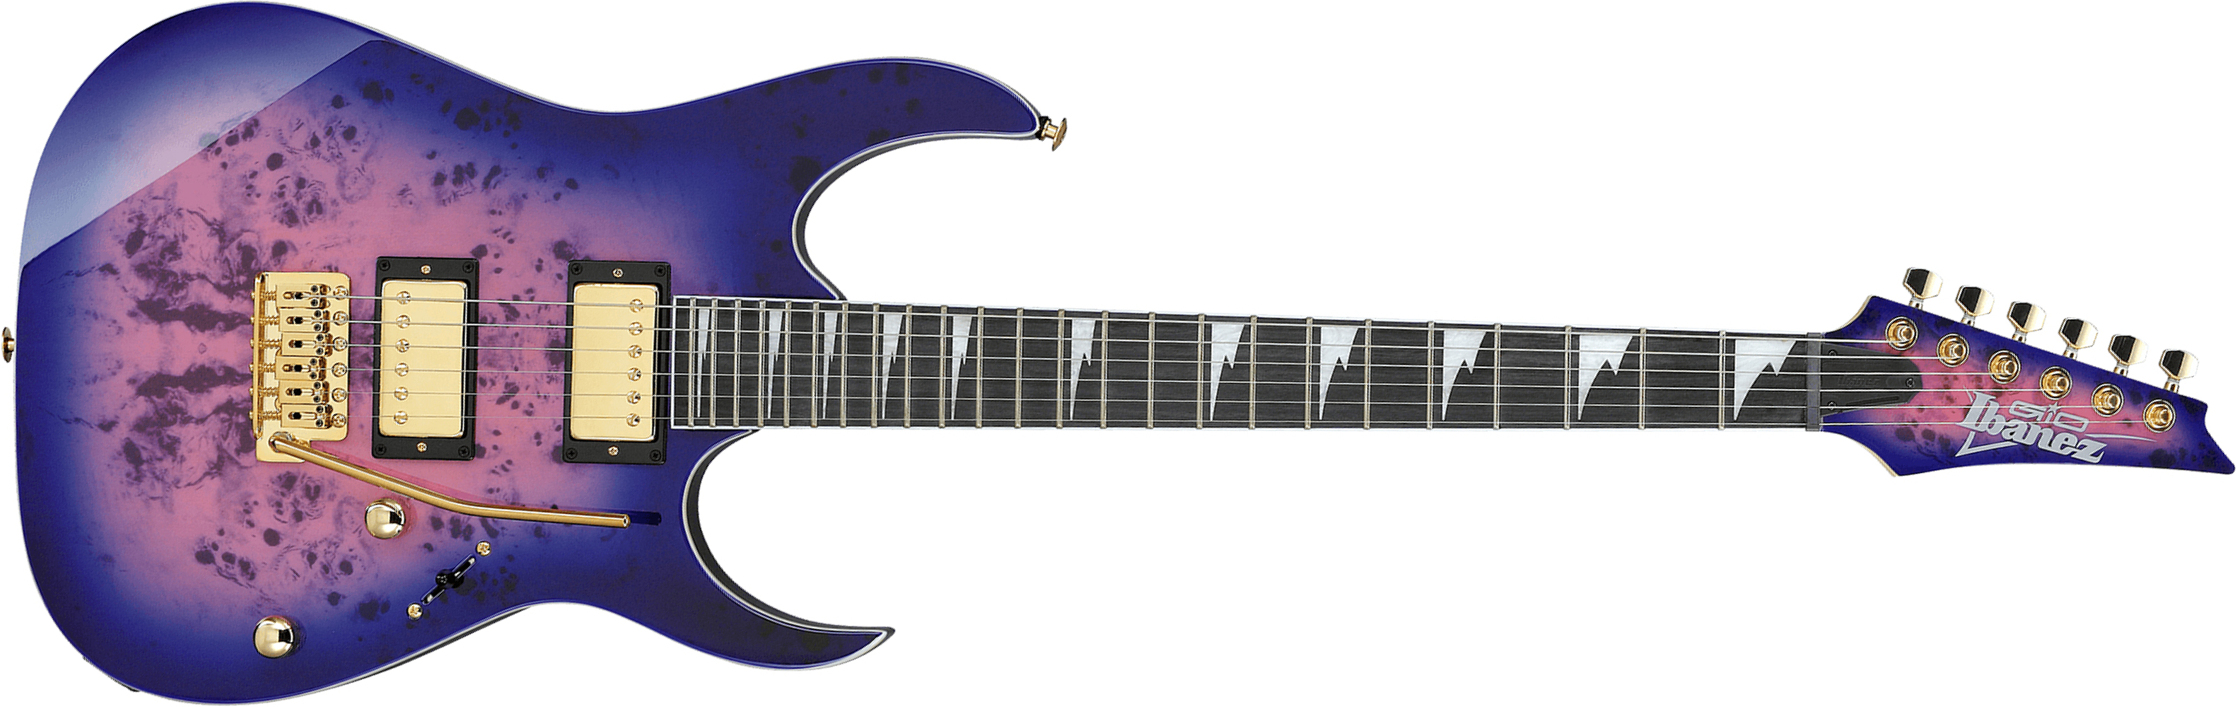 Ibanez Grg220pa Rlb Gio 2h Trem Pur - Royal Purple Burst - E-Gitarre in Str-Form - Main picture